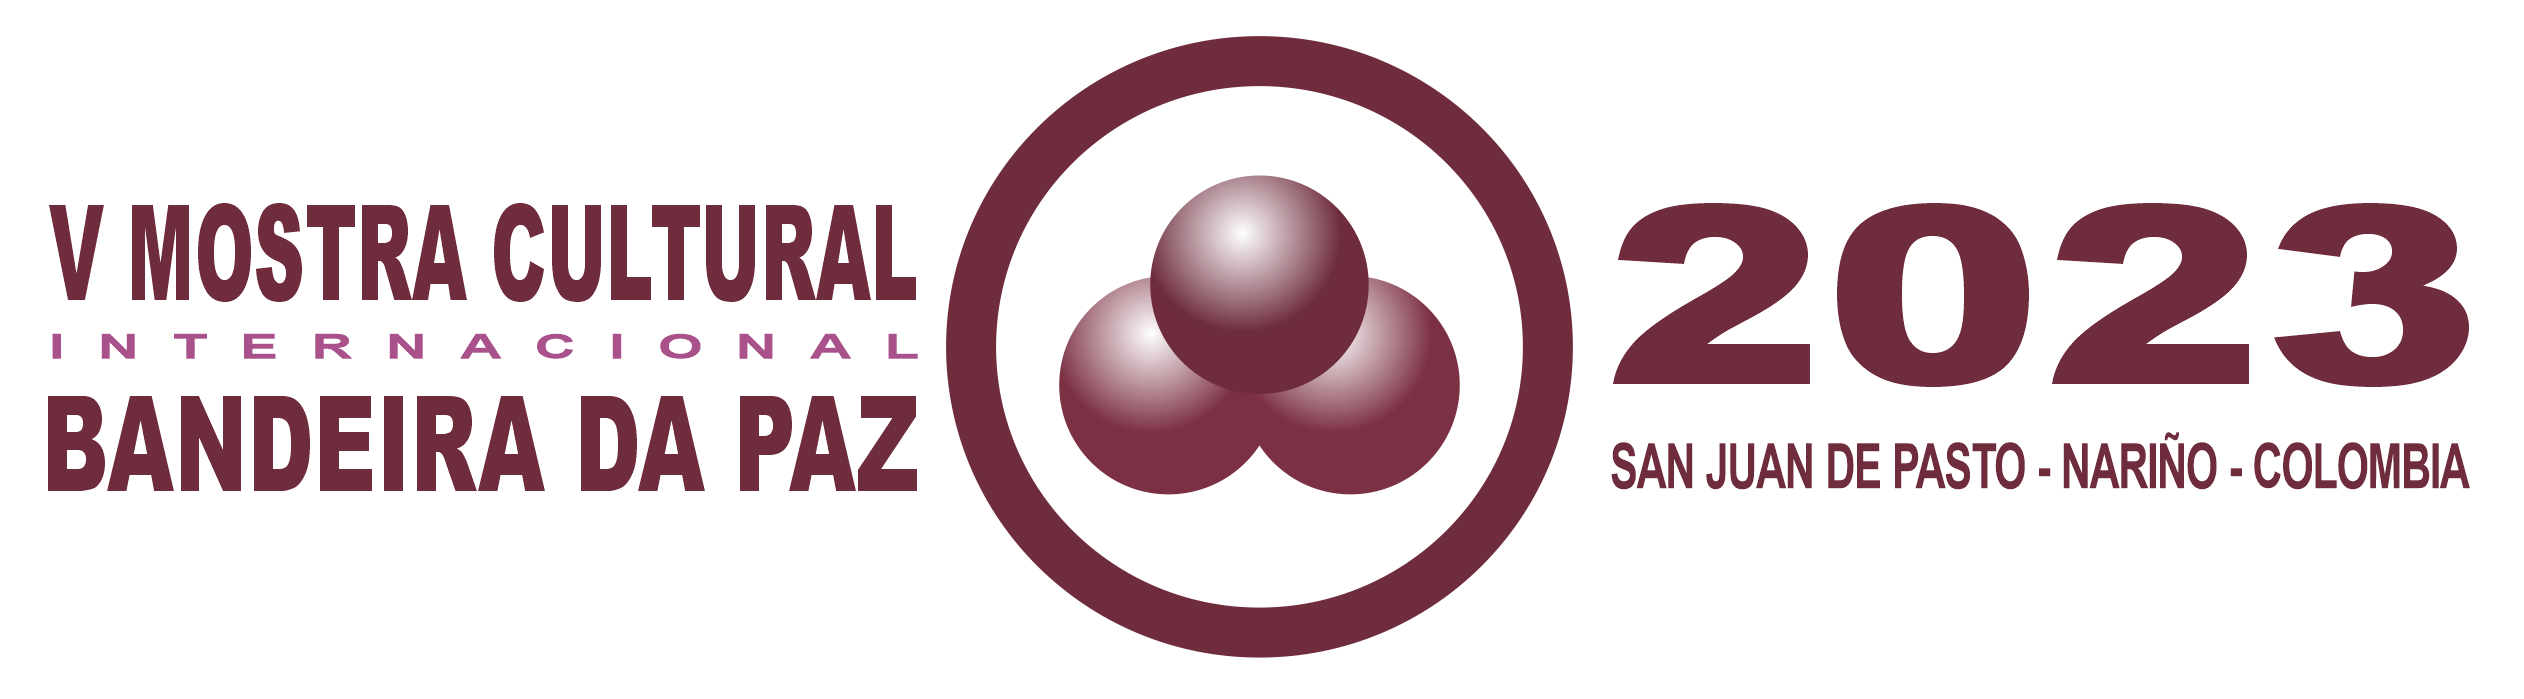 Logo V MOSTRA 2023_SAN JUAN DE PASTO_COLOMBIA_2